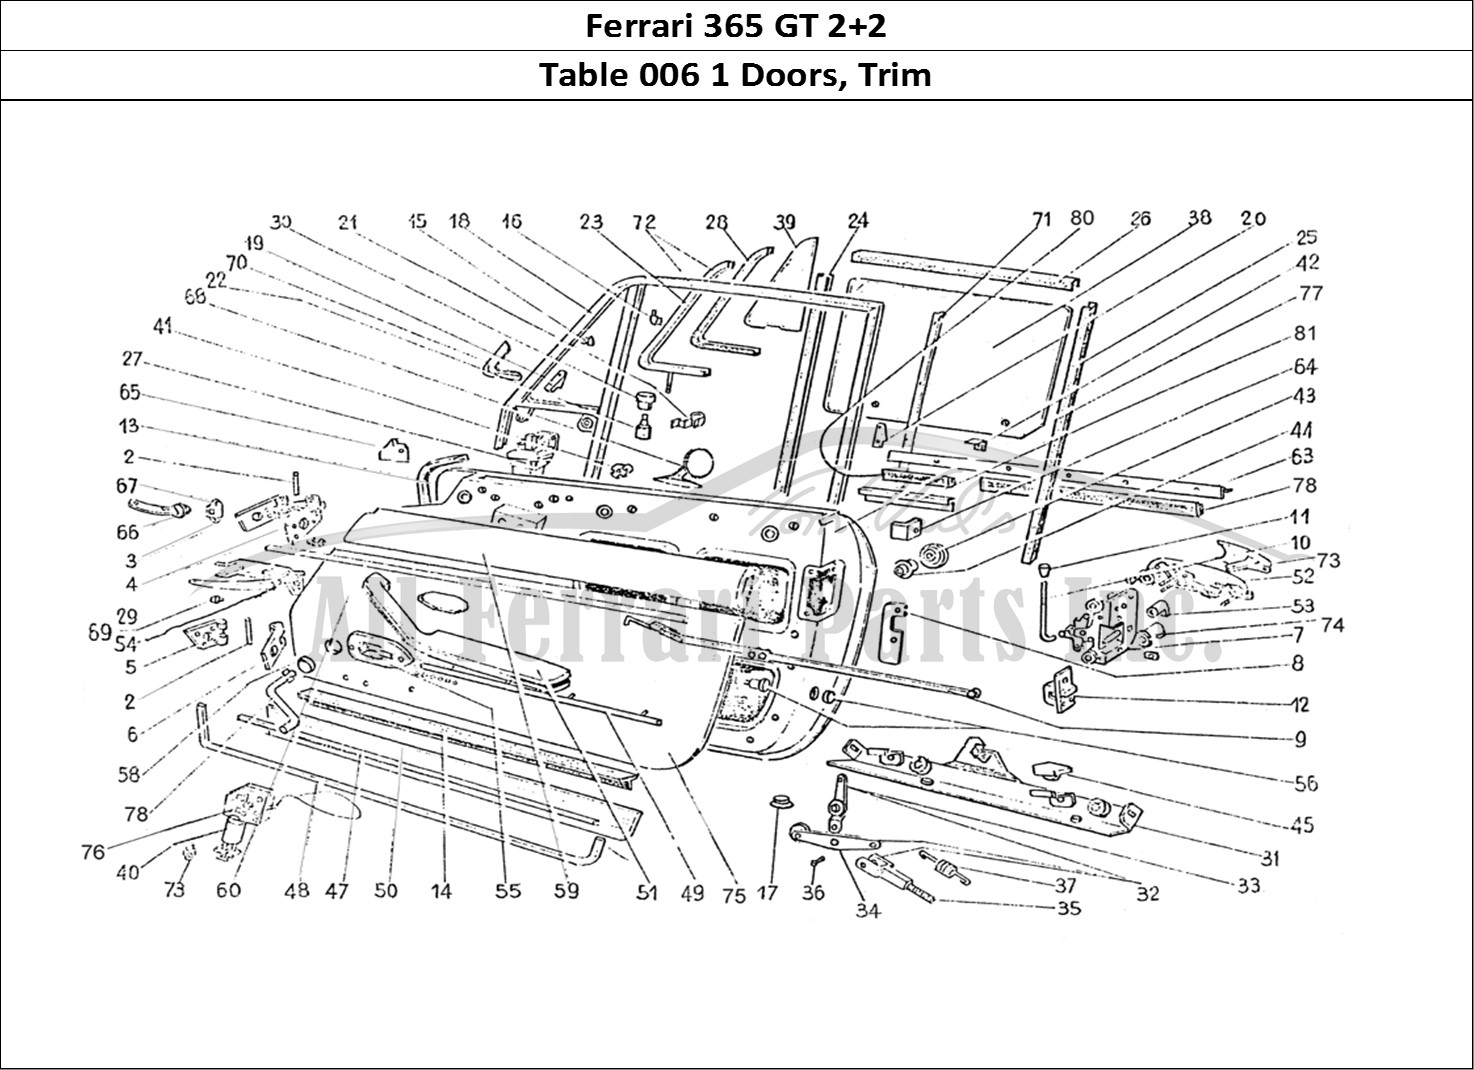 Ferrari Parts Ferrari 365 GT 2+2 (Coachwork) Page 006 Doors & Trim